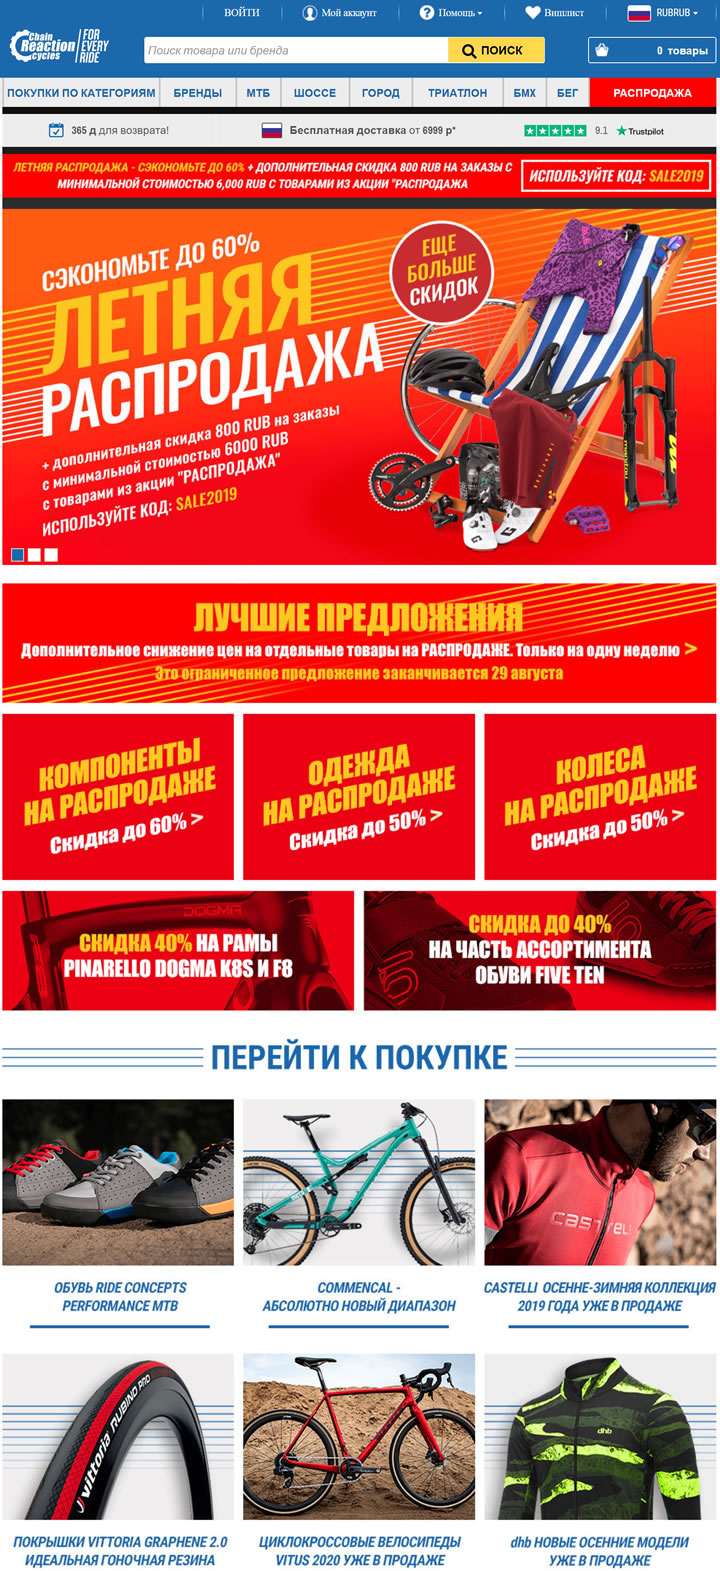 Chain Reaction Cycles俄羅斯：世界上最大的在線自行車商店 俄羅斯購物網站 MeetKK-MeetKK